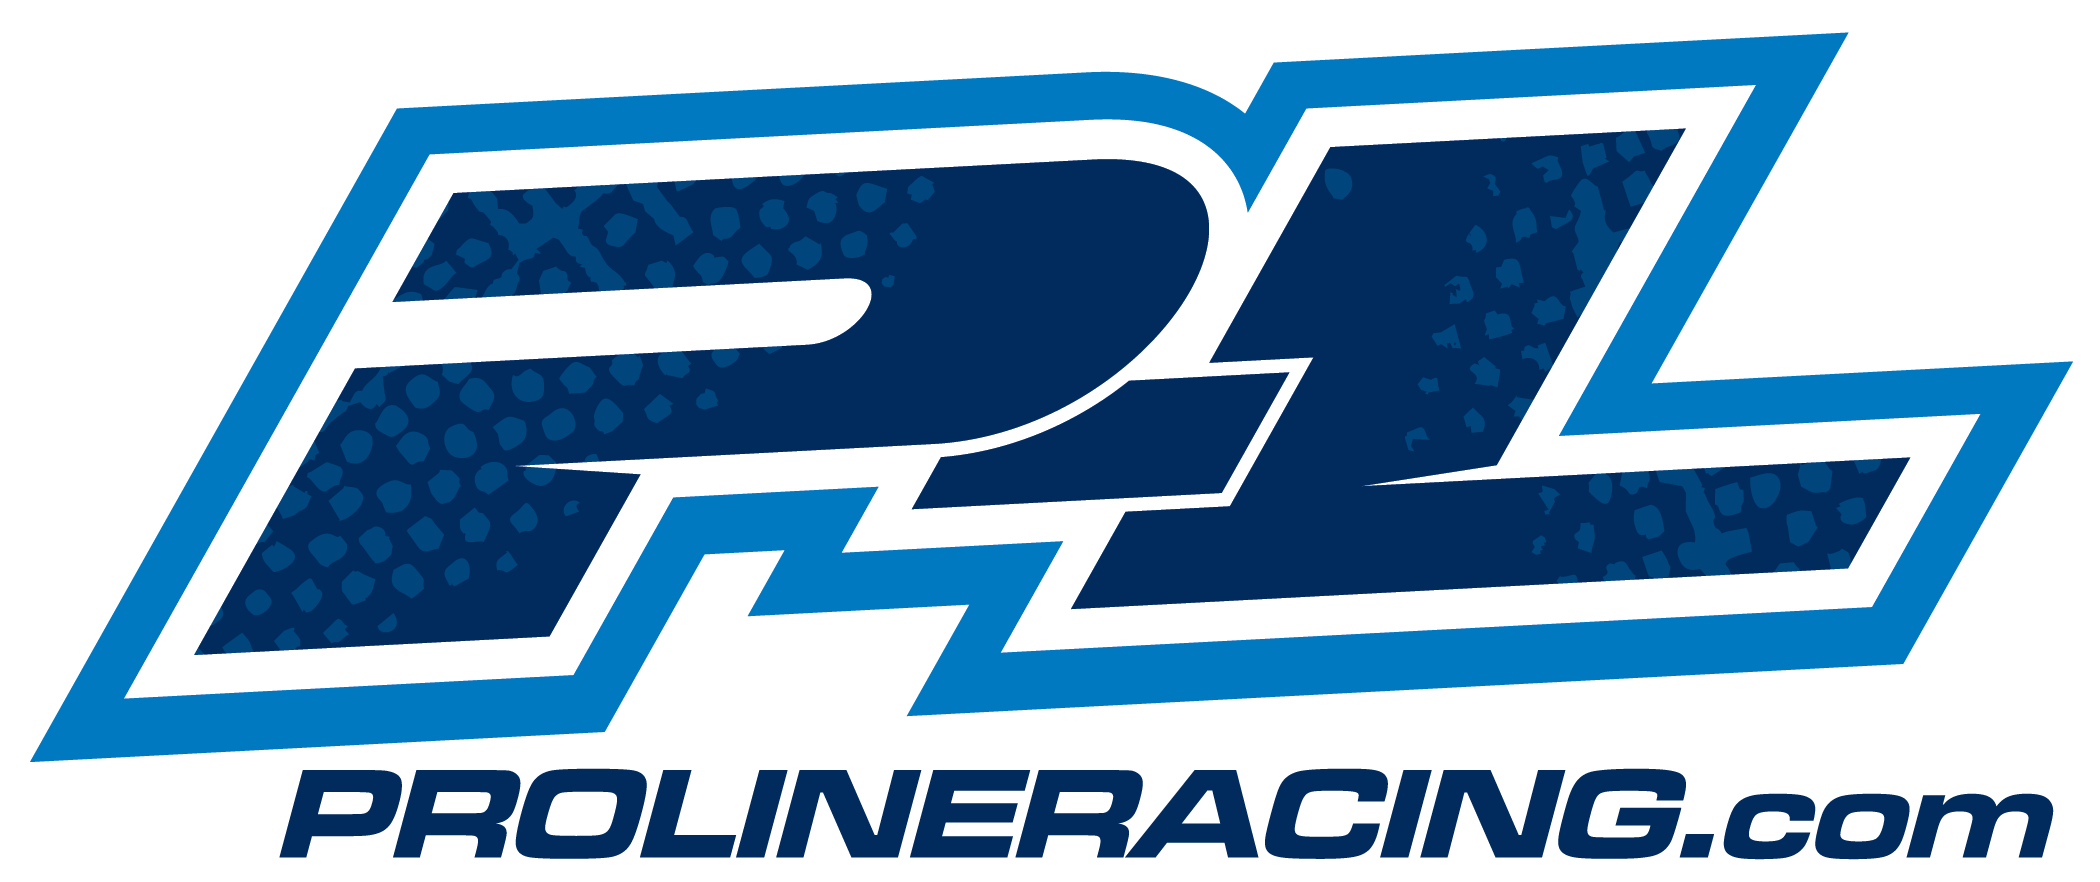 Proline Logo - Logos & Banners | ProLineRacing.com